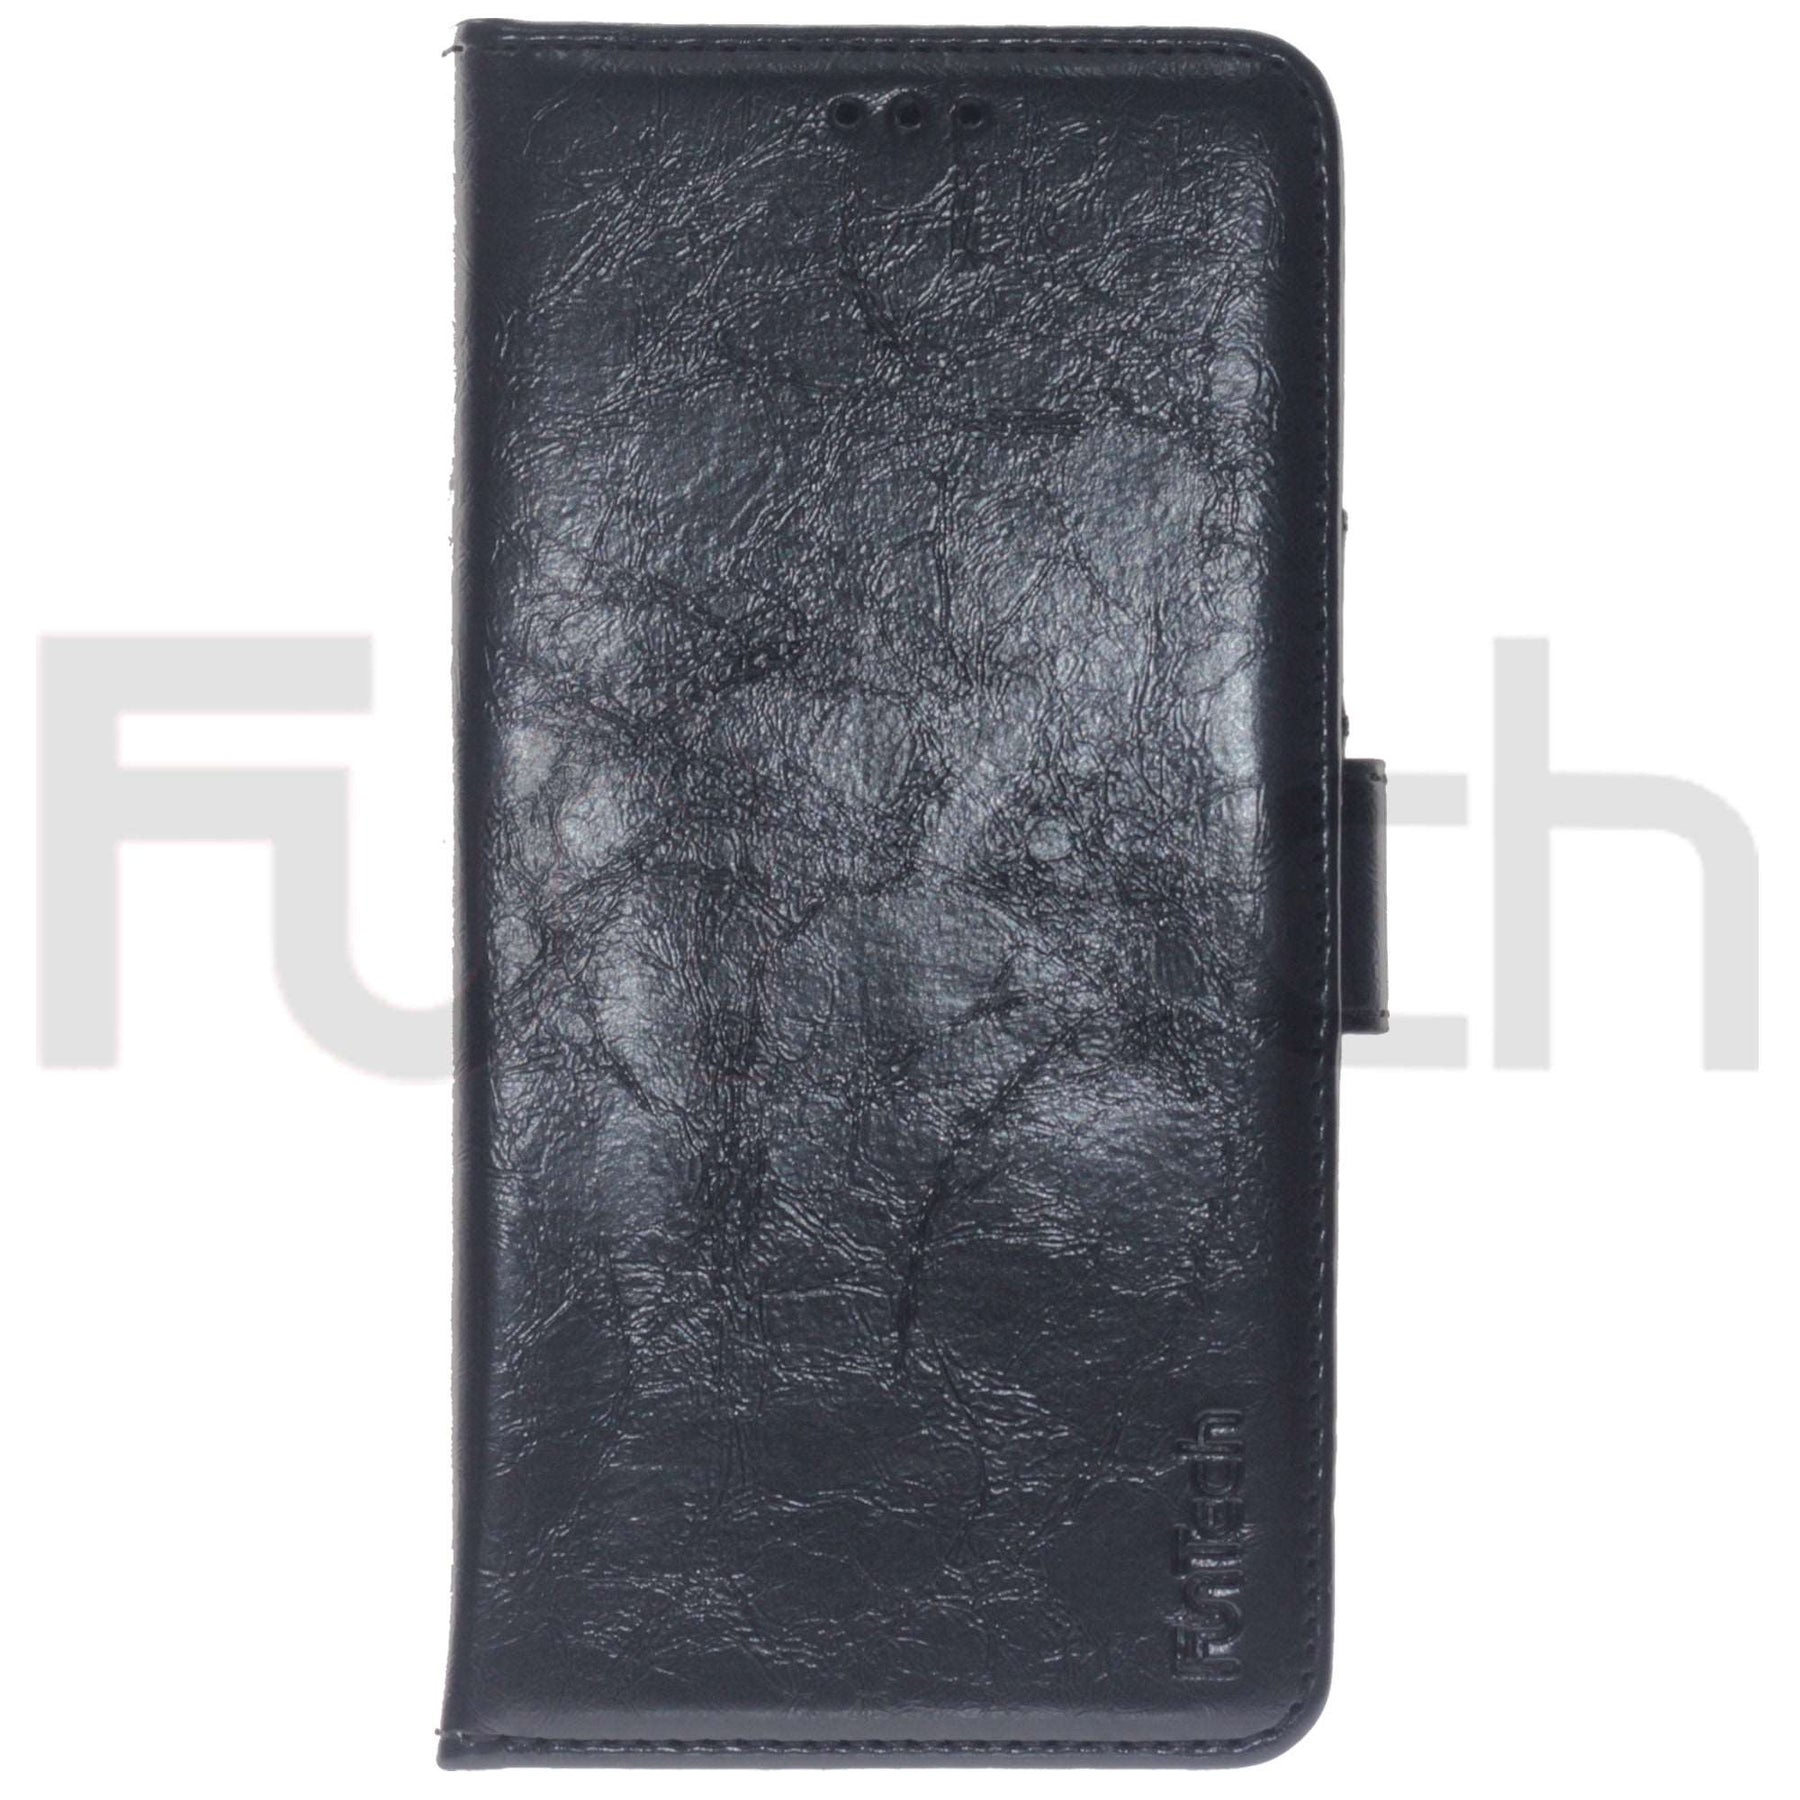 Samsung A5 2017,  Leather Wallet Case, Color Black.